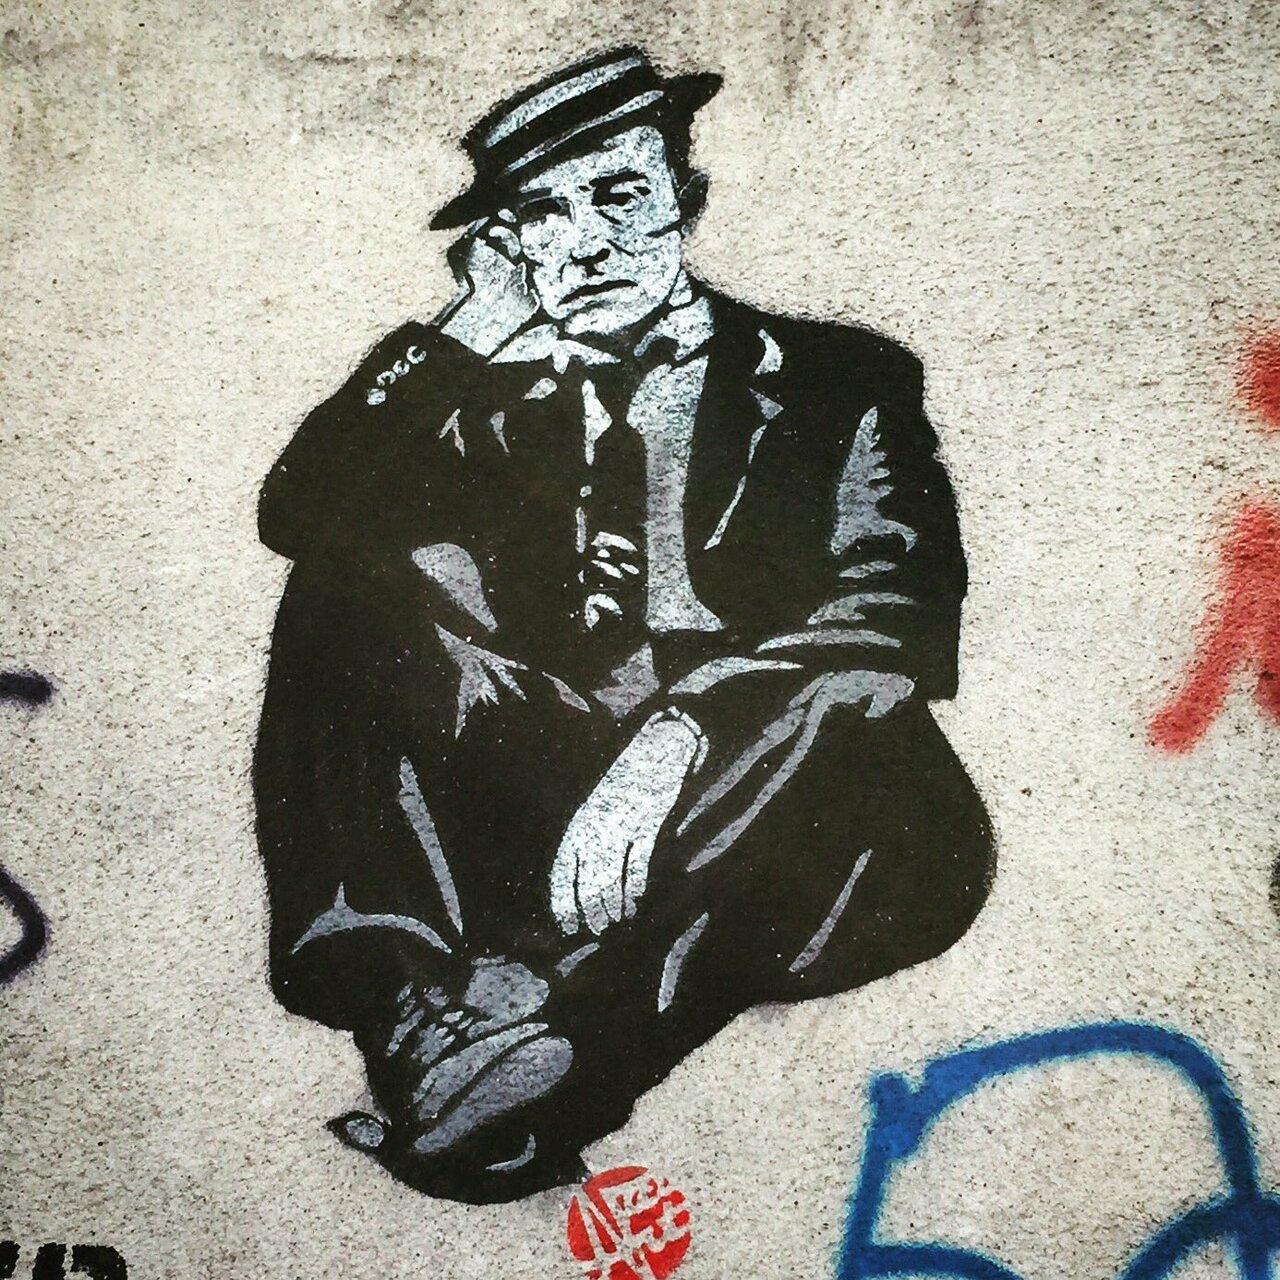 Buster Keaton waiting by #pascoariane #busterkeaton #streetart #graffiti #graff #spray #bombing #wall https://t.co/64iO398NwC